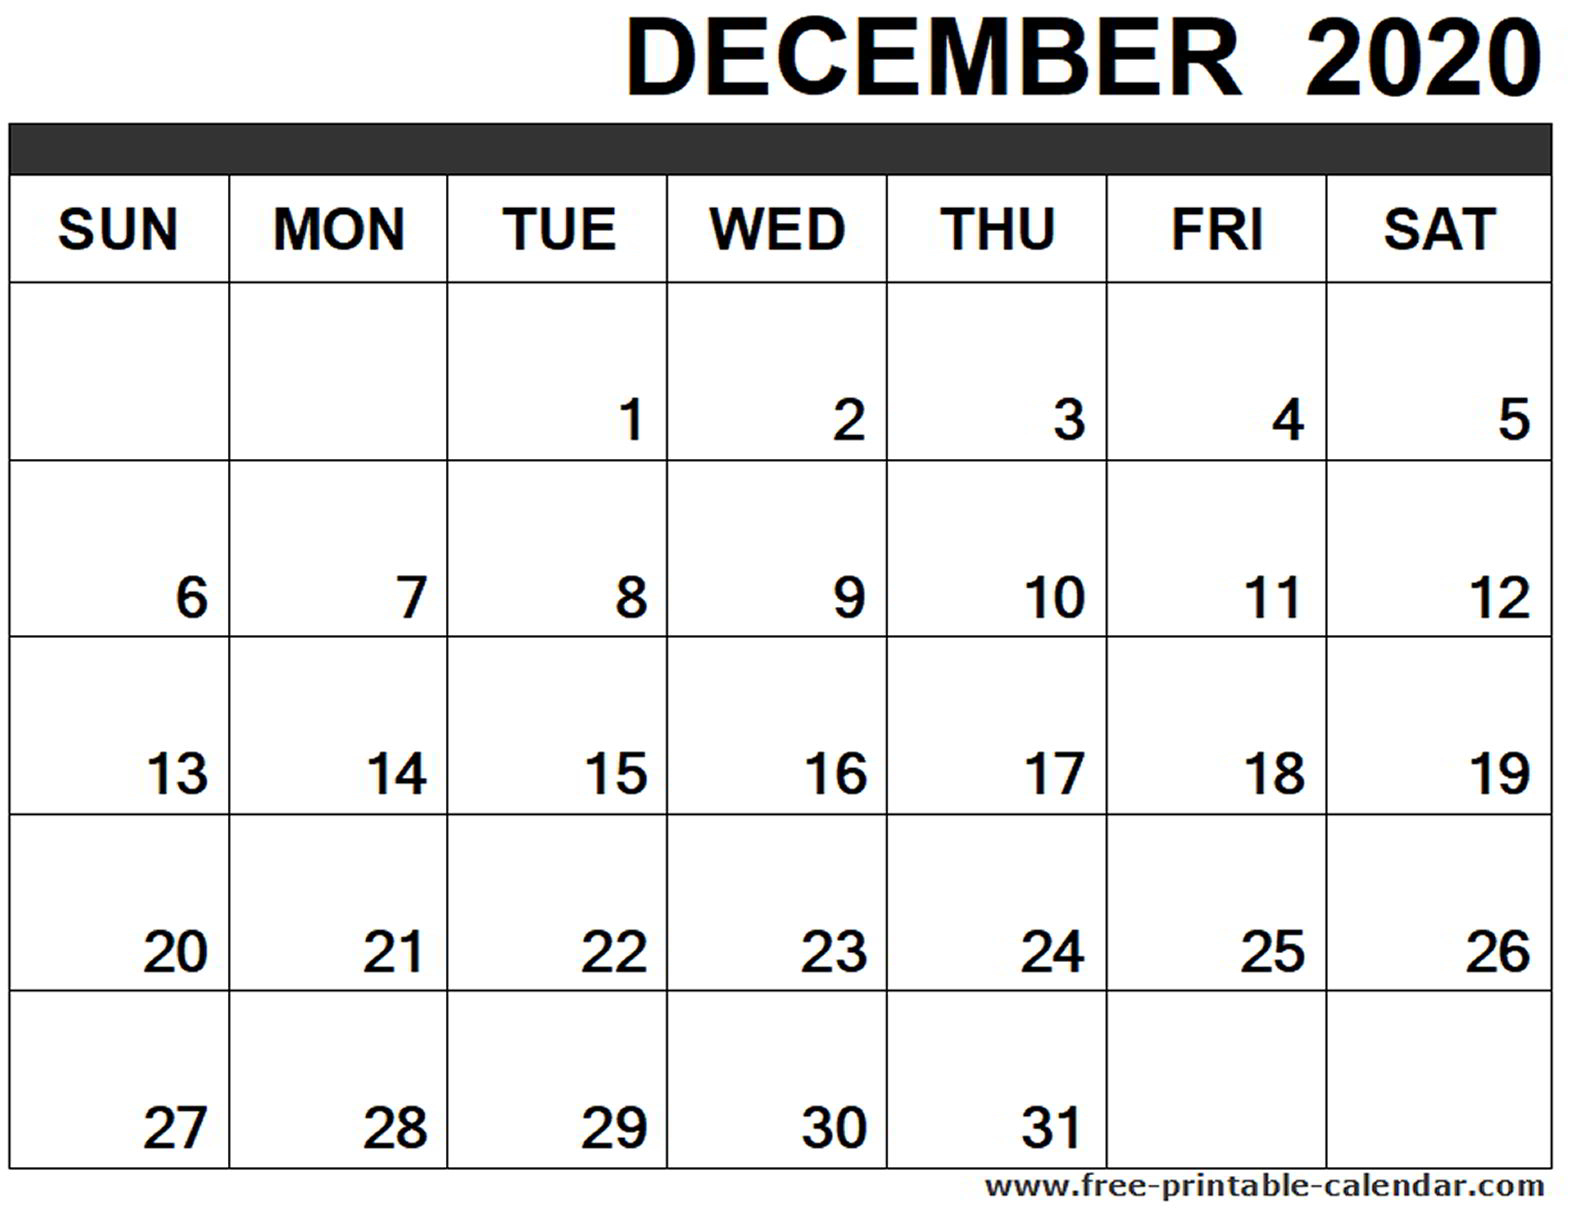 December 2020 Calendar Printable - Free-Printable-Calendar